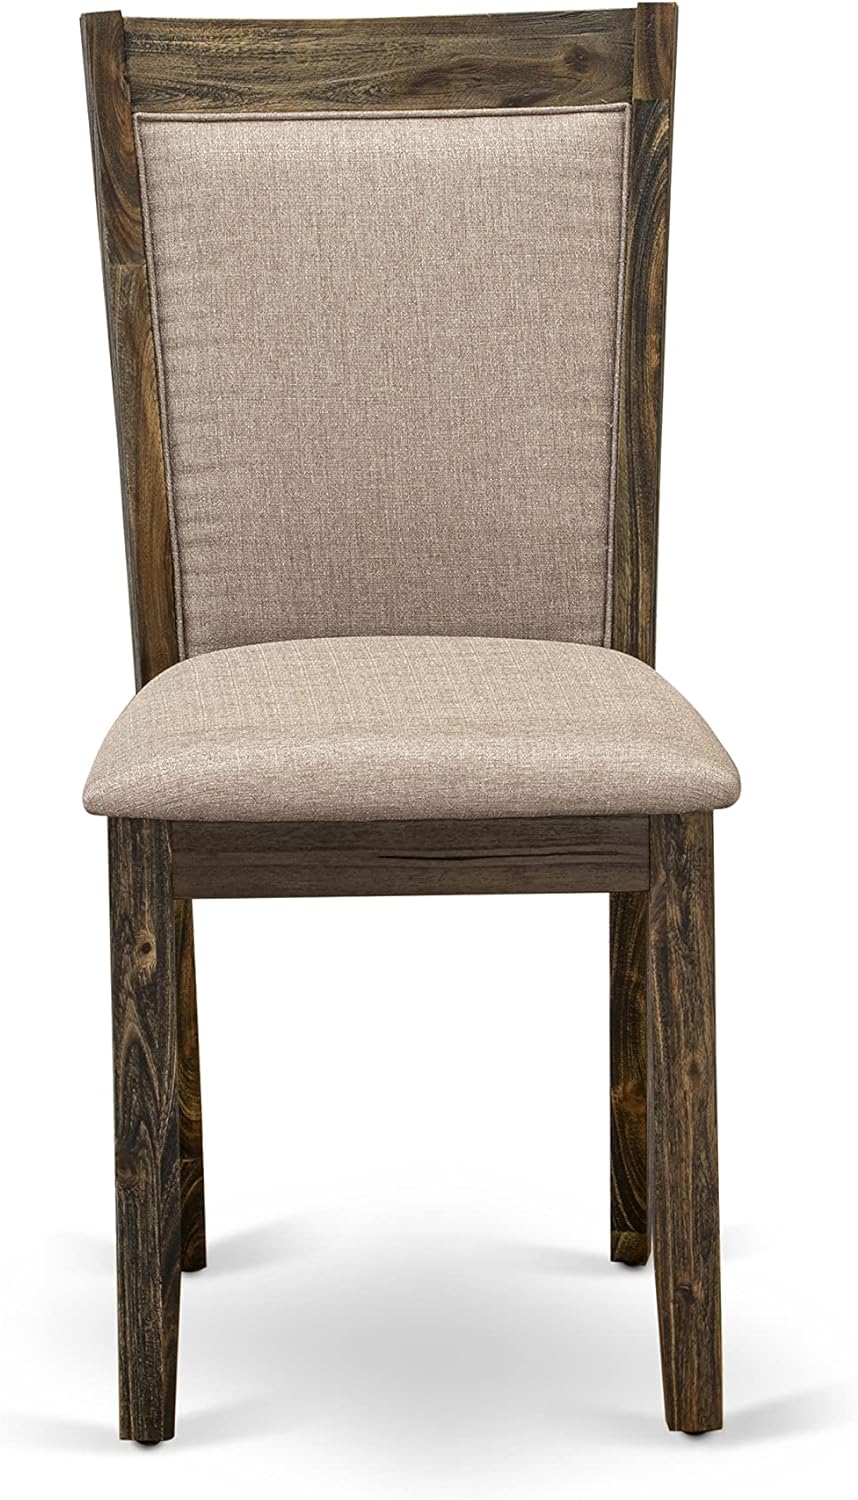 Monza Parson Juego de 2 sillas acolchadas de tela de lino color caqui oscuro,